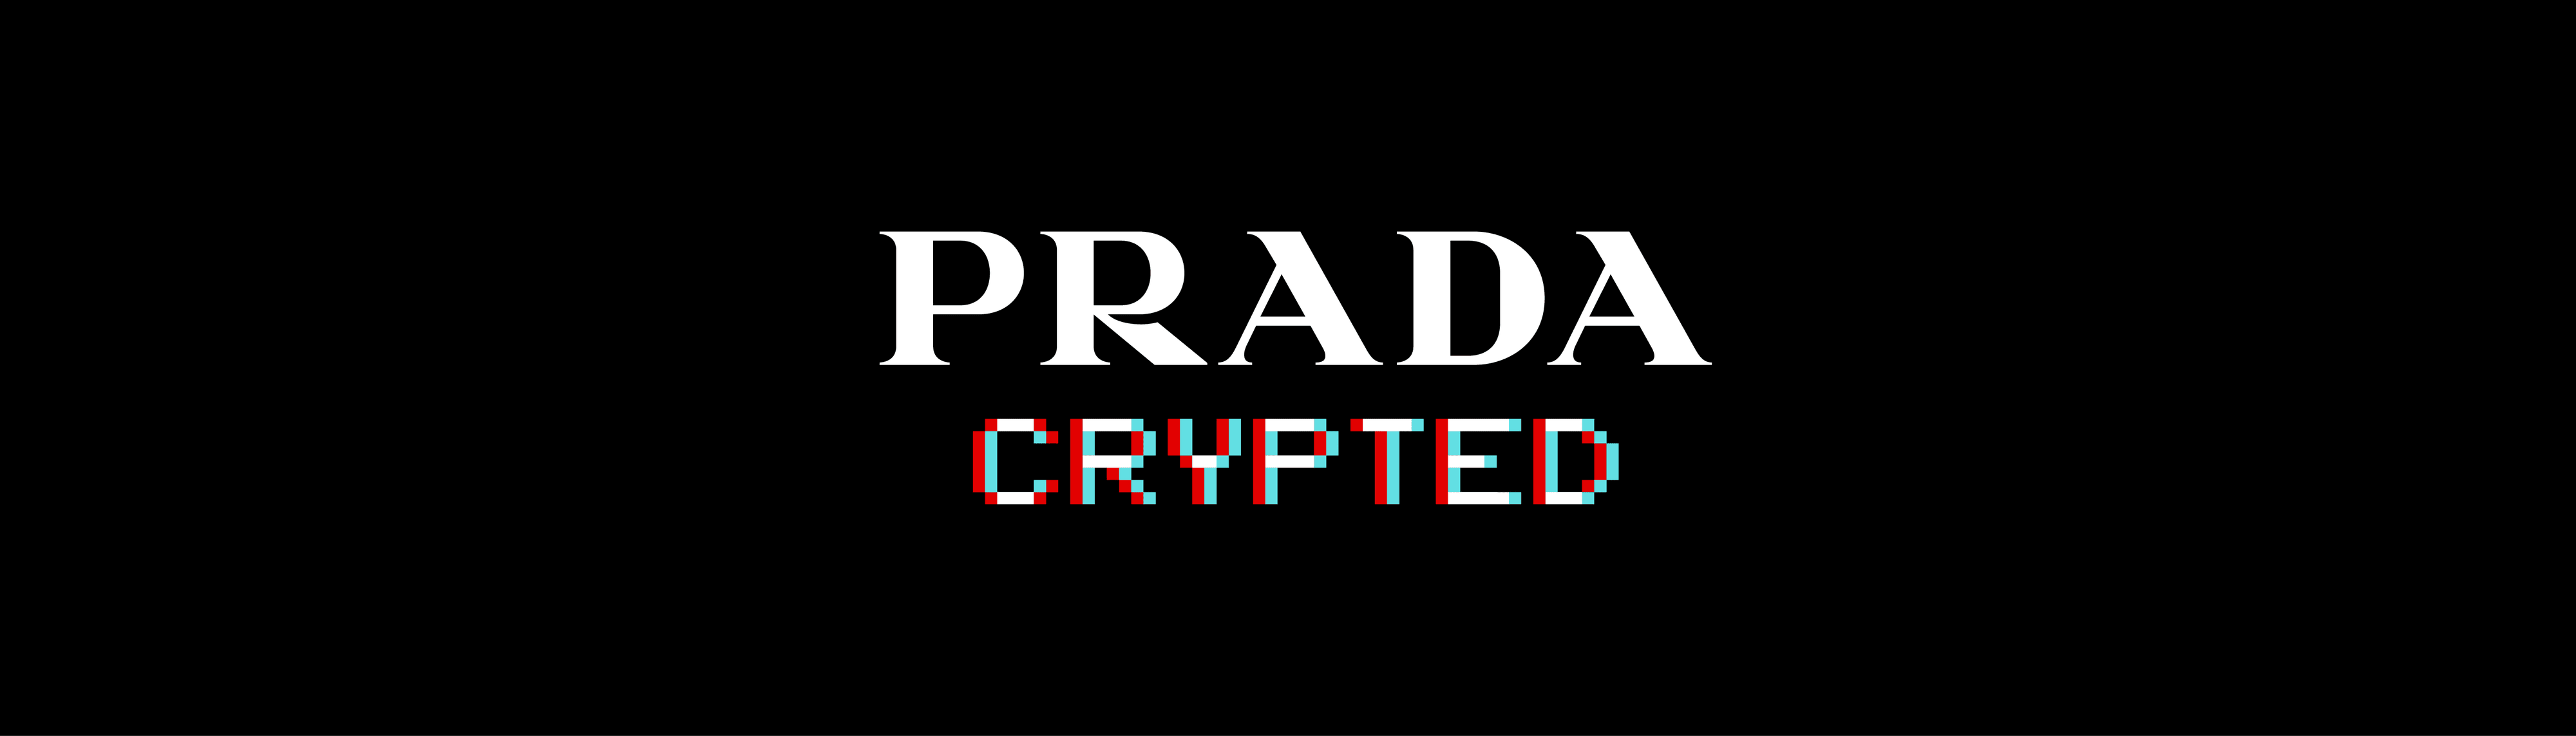 Prada-Crypted 橫幅